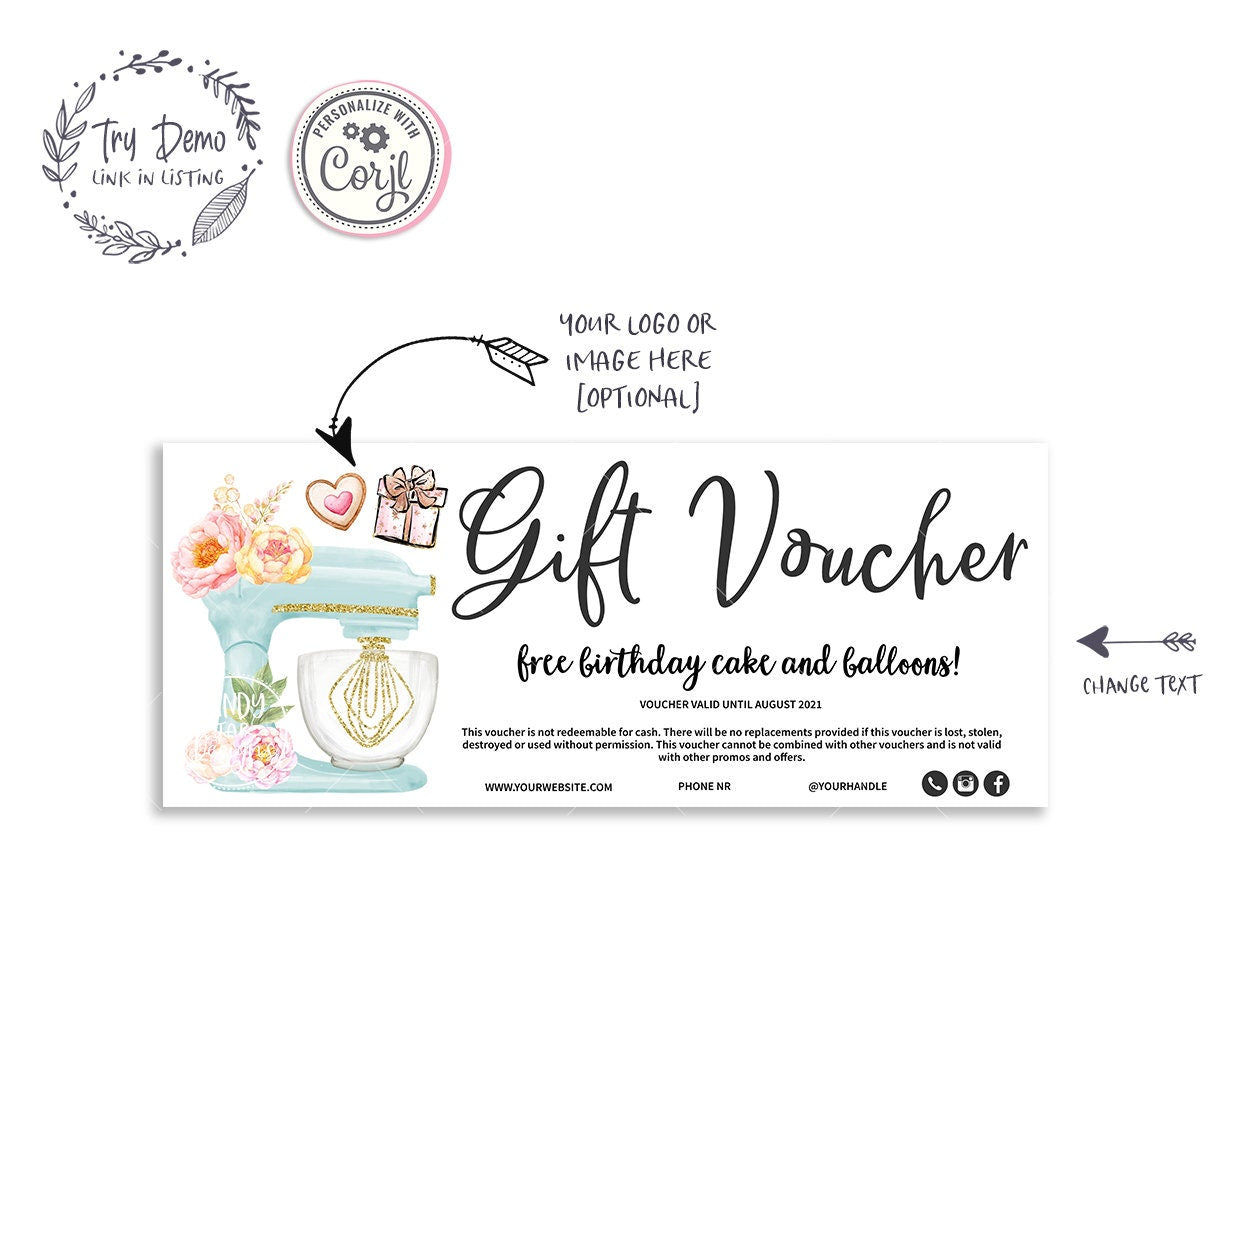 Bakery Gift Voucher, Kitchen Mixer - Candy Jar Studios